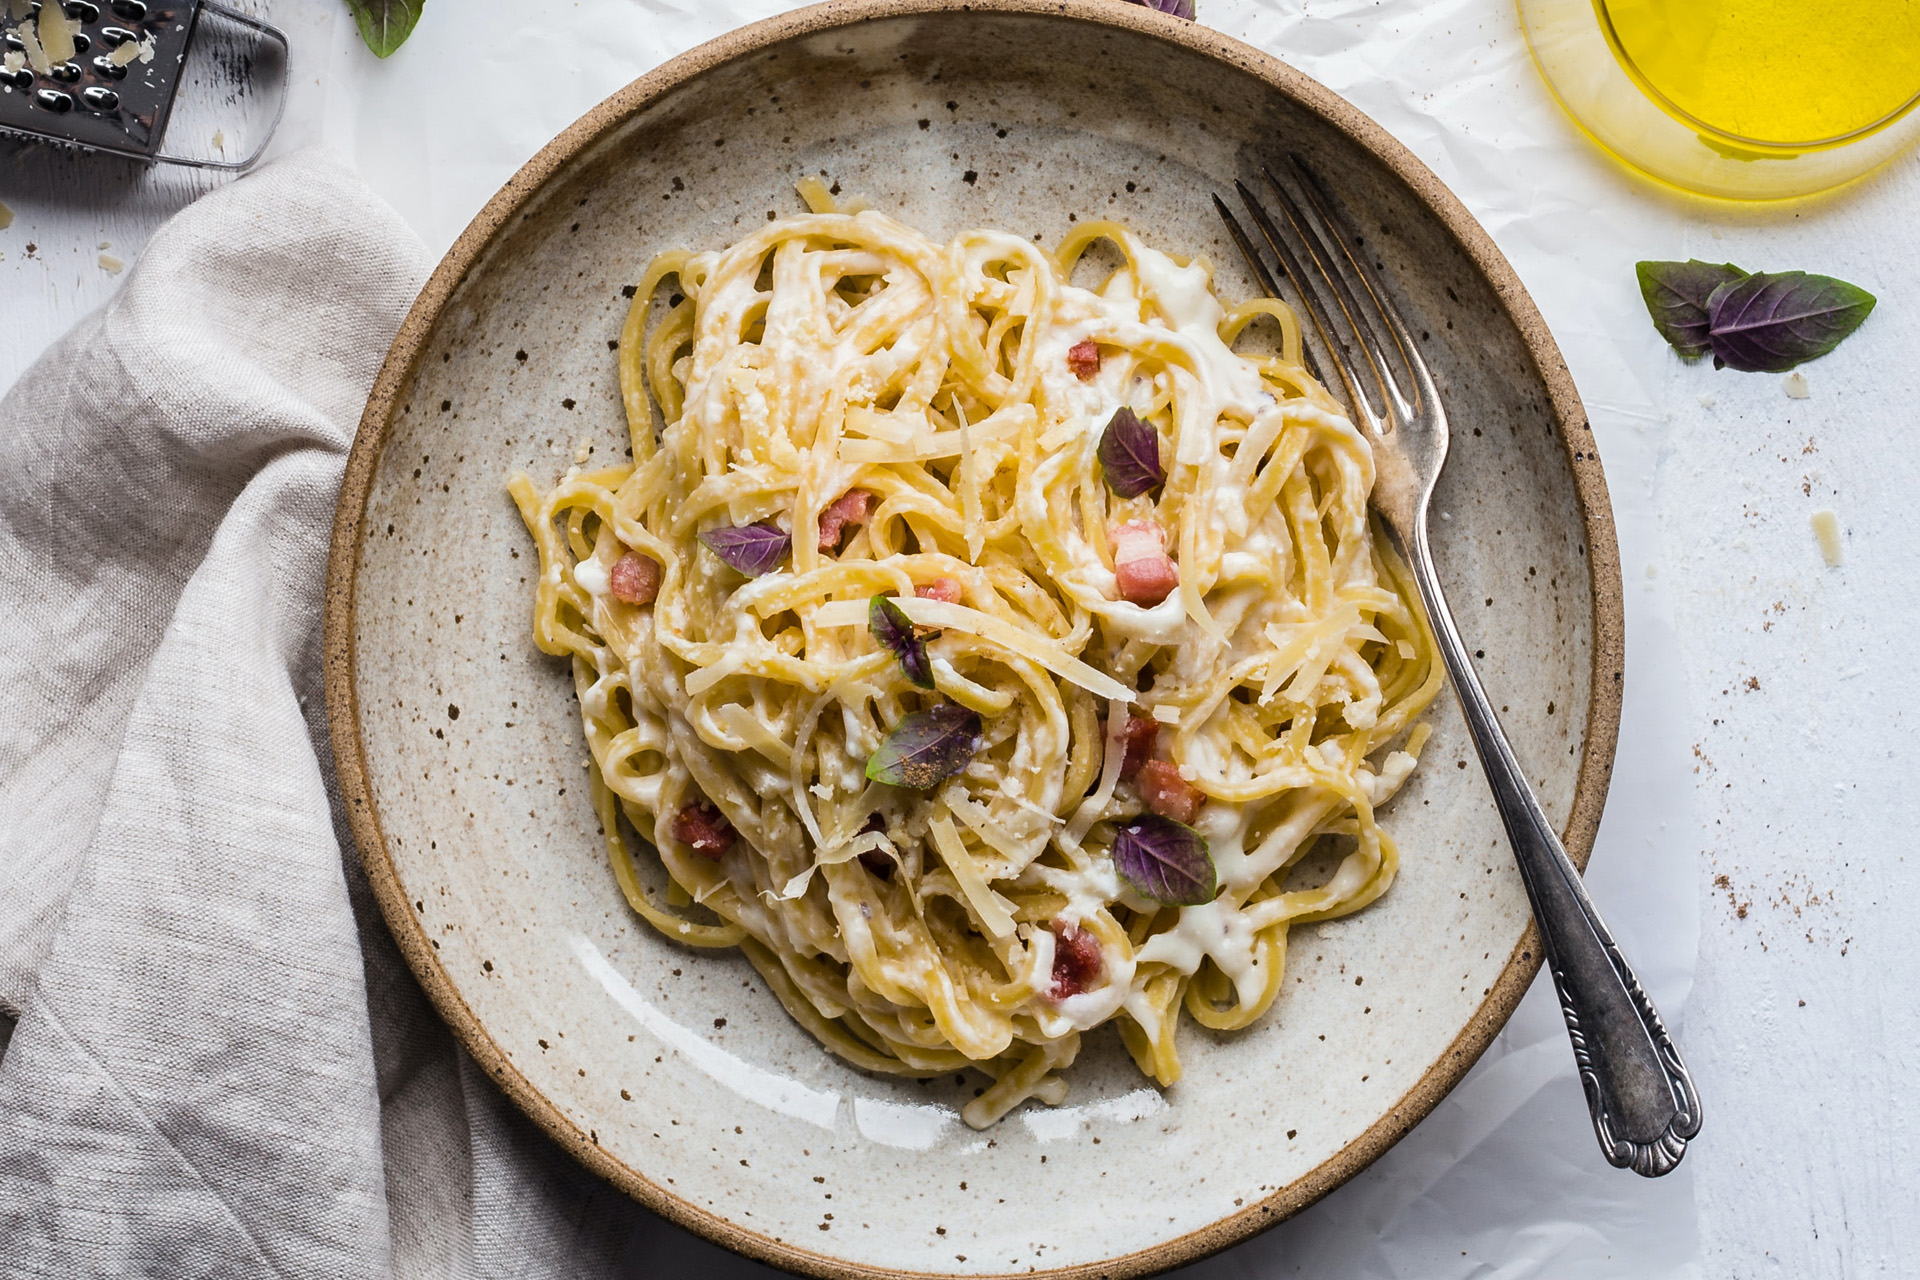 Spaghetti carbonara is Prince George's favourite meal